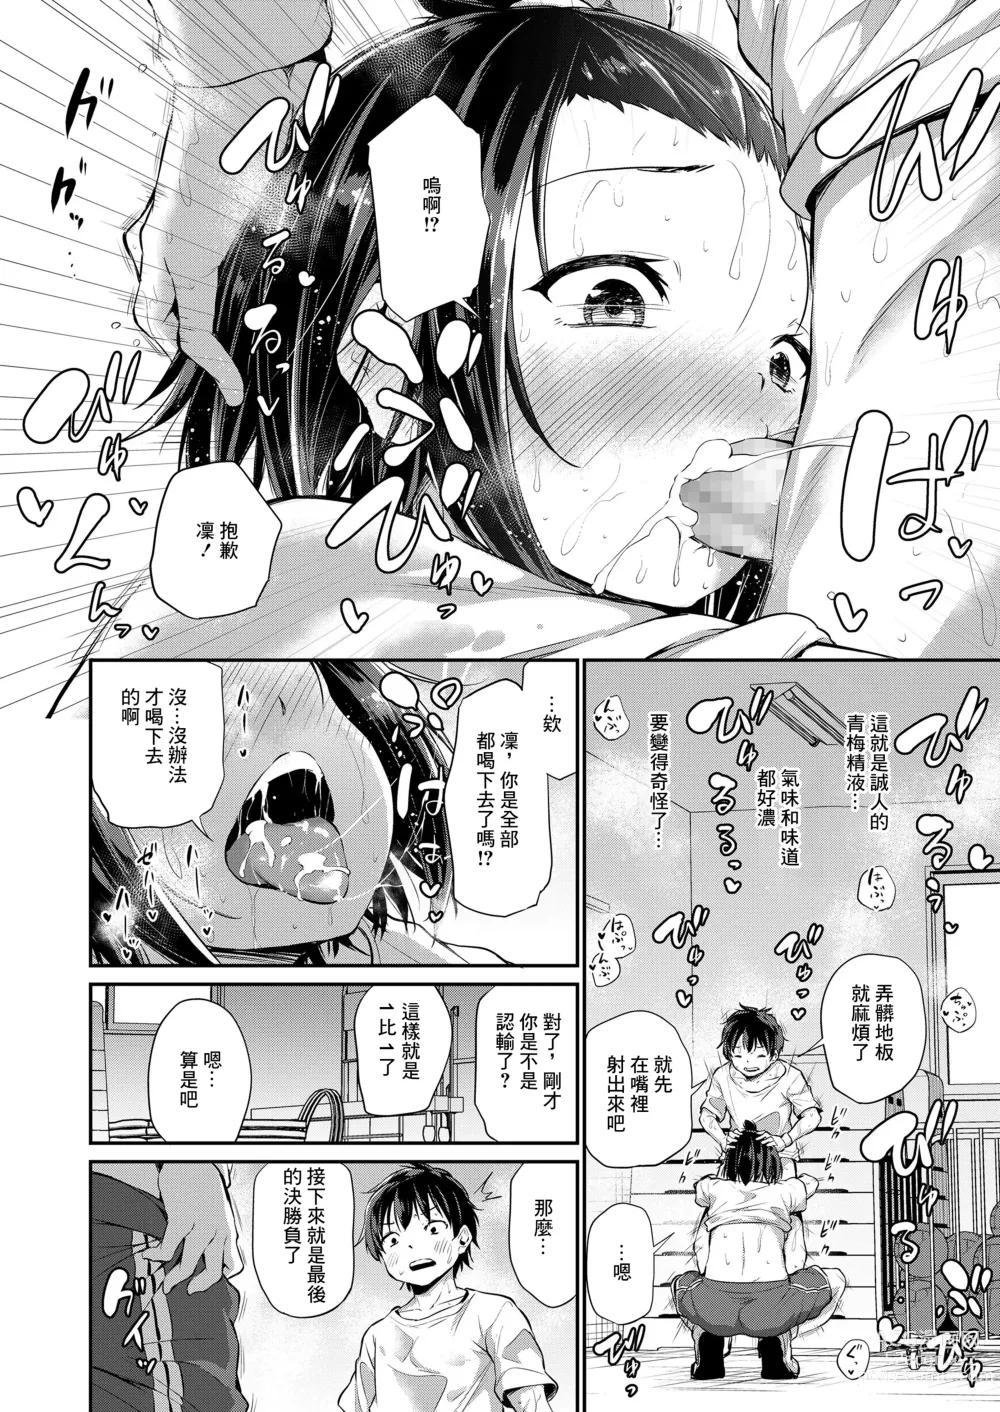 Page 14 of manga Dekoboko 1ON1